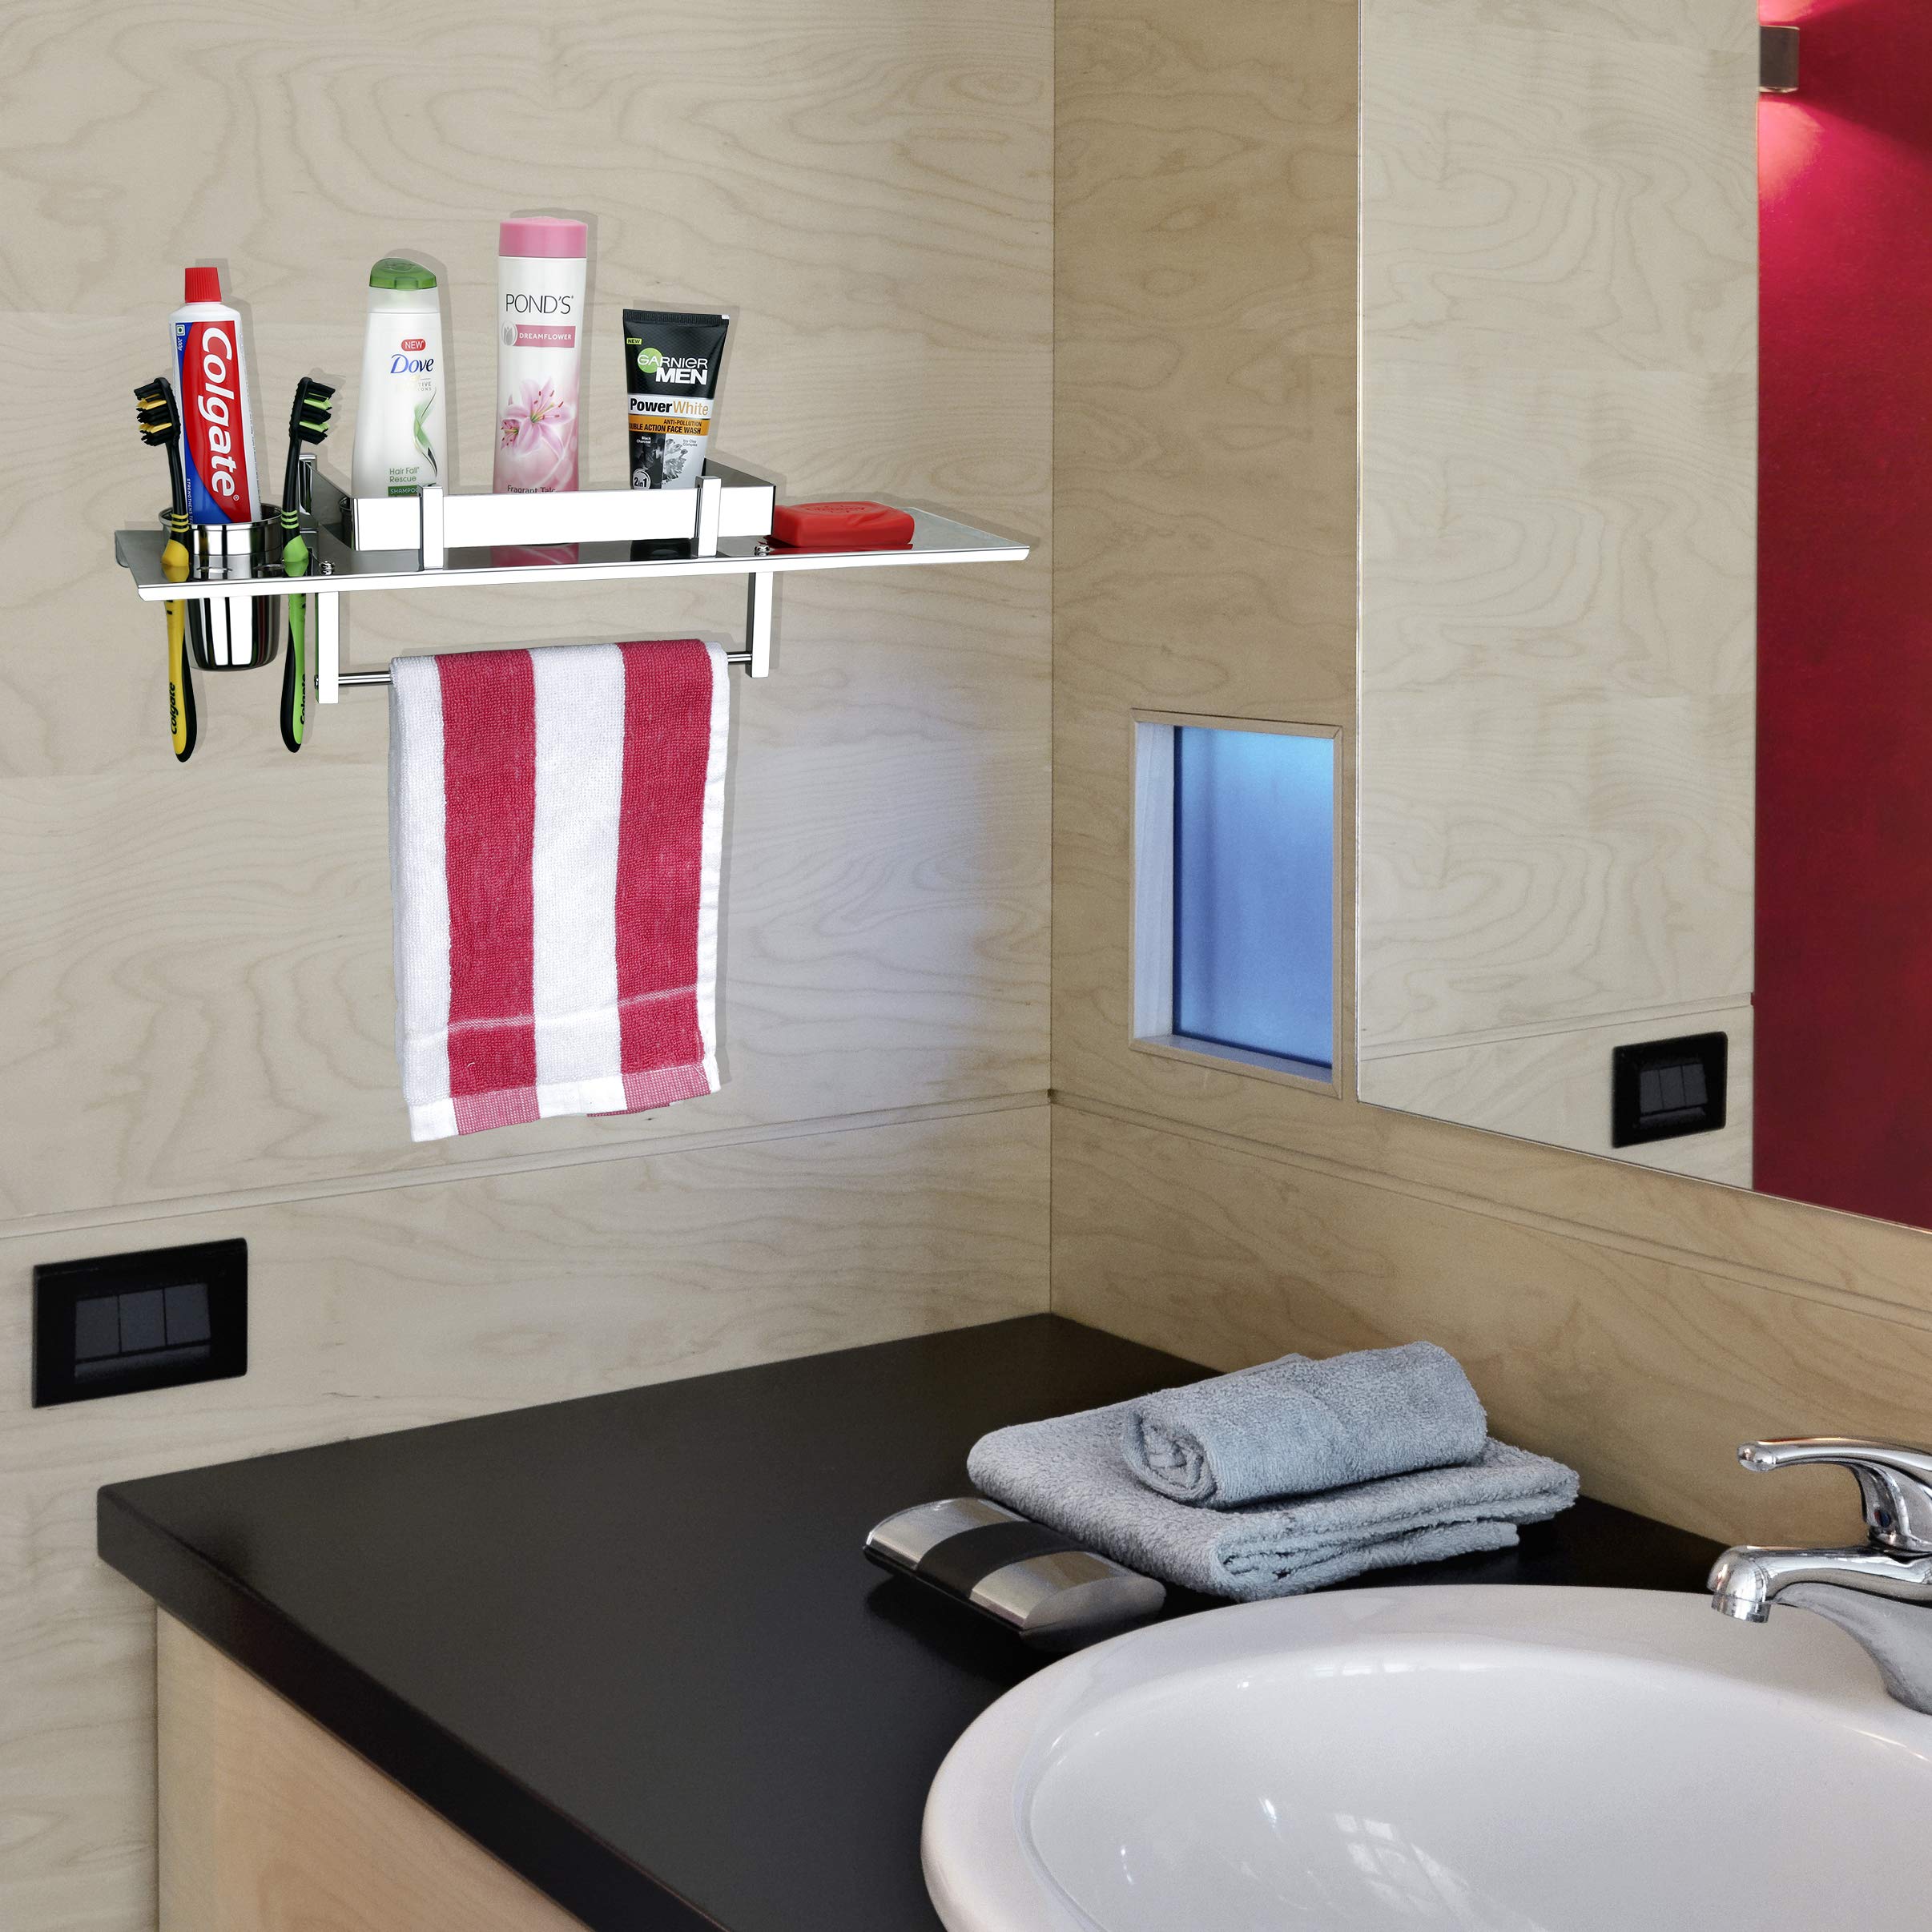 Plantex Stainless Steel 4in1 Multipurpose Bathroom Shelf/Rack/Towel Hanger/Tumbler Holder/Soap Dish/Bathroom Accessories (18 x 5 Inches) - Pack of 1